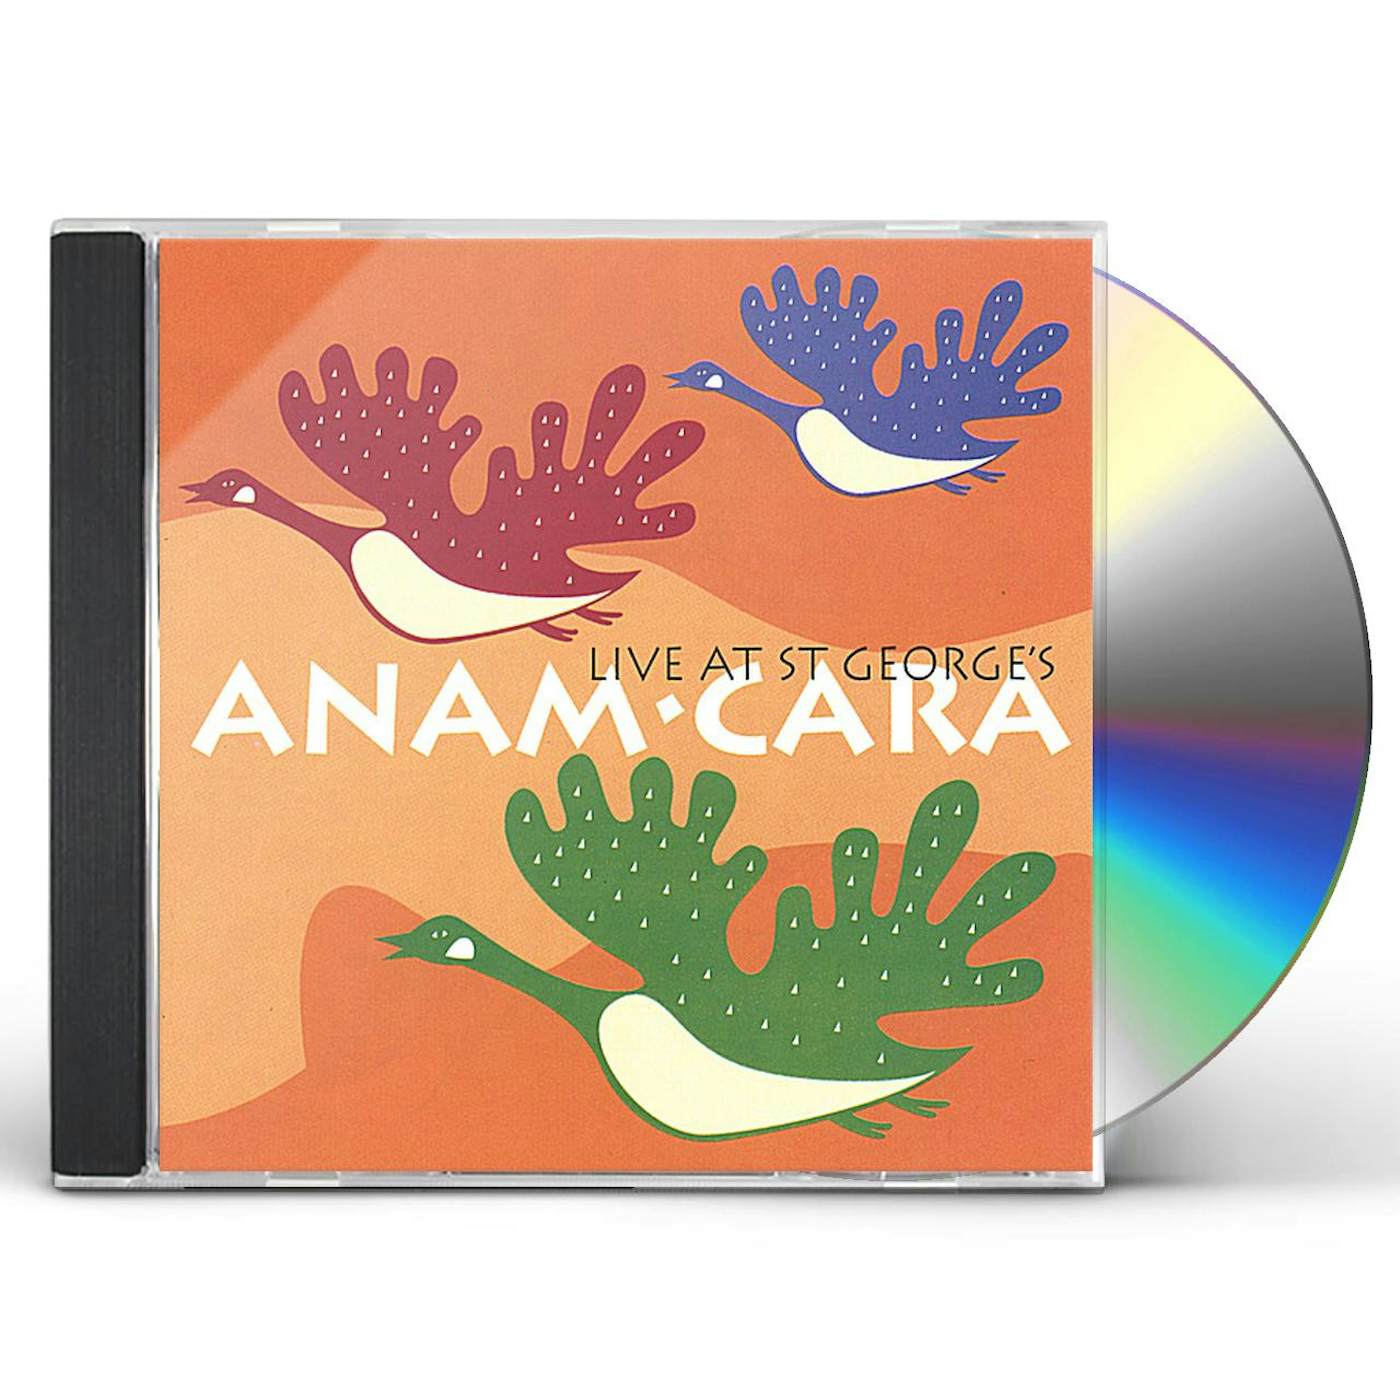 Anam Cara LIVE AT ST GEORGE'S CD